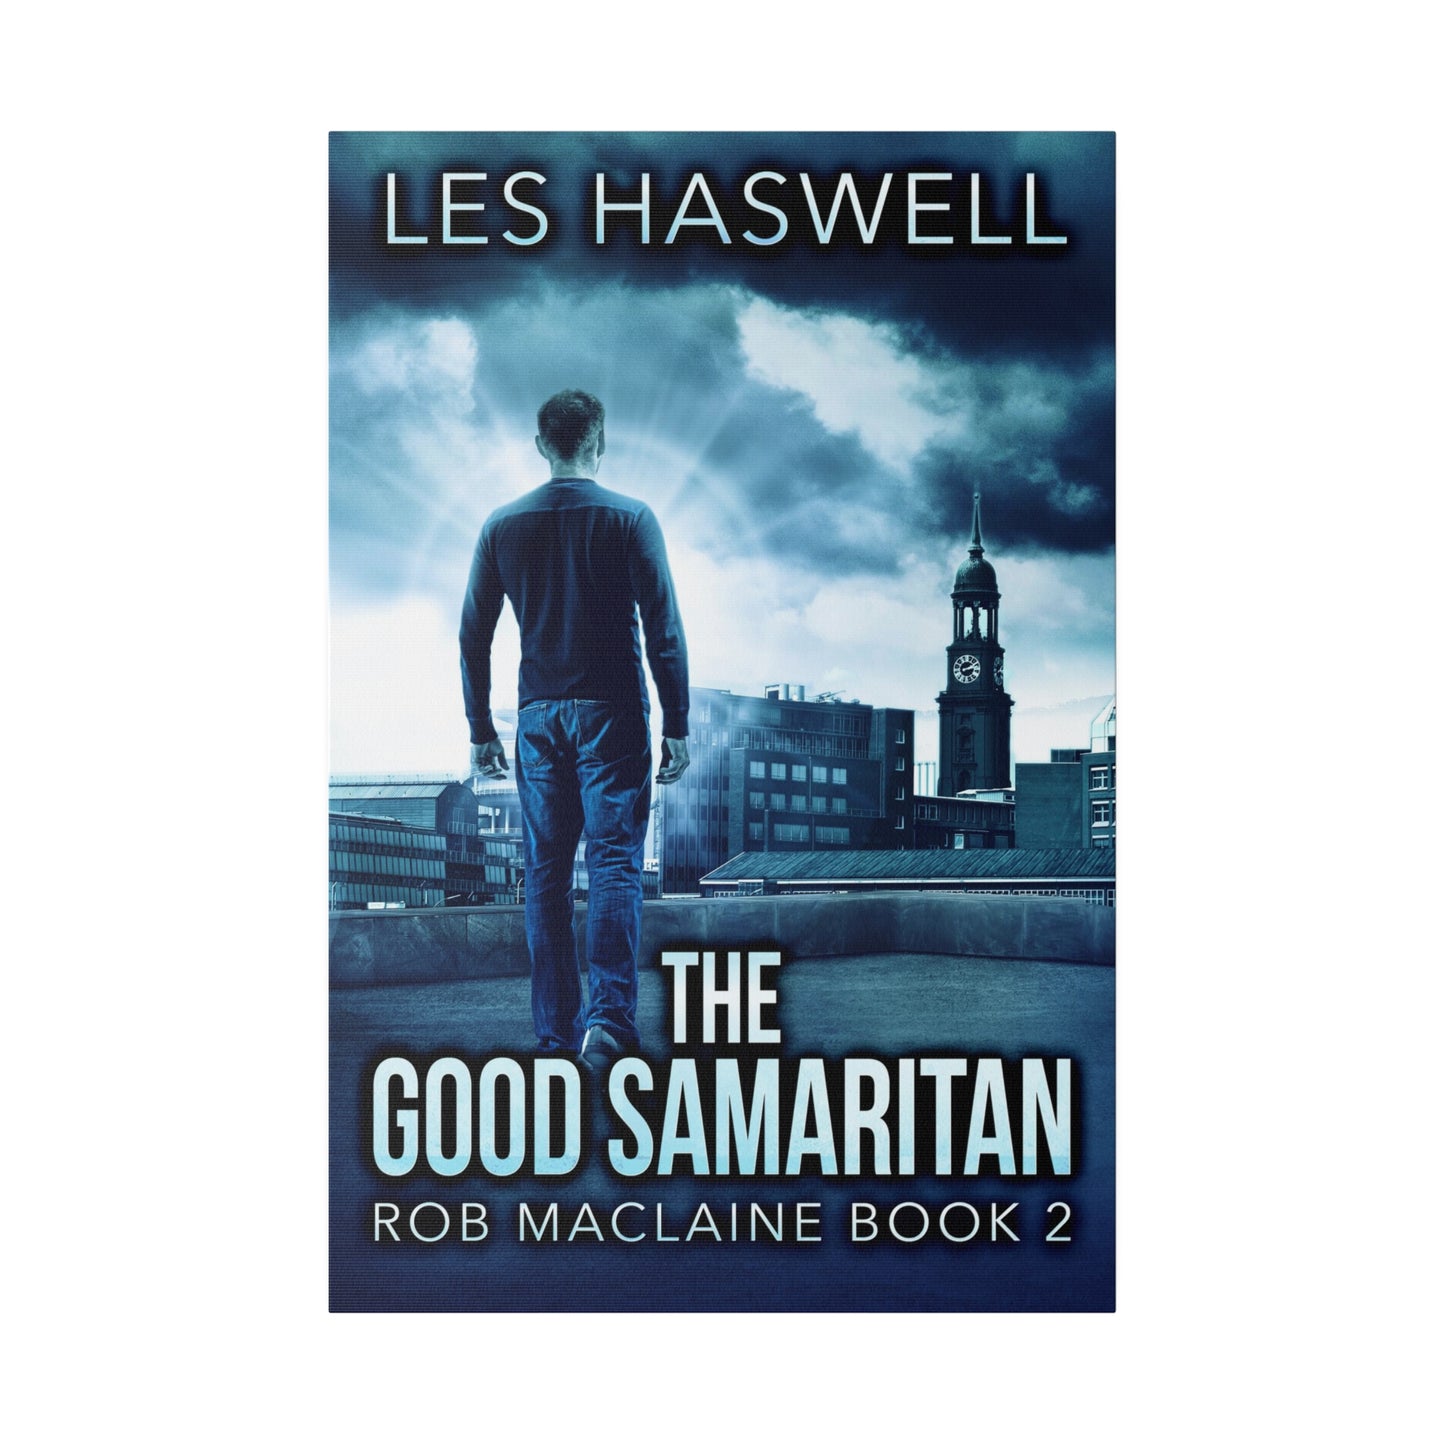 The Good Samaritan - Canvas